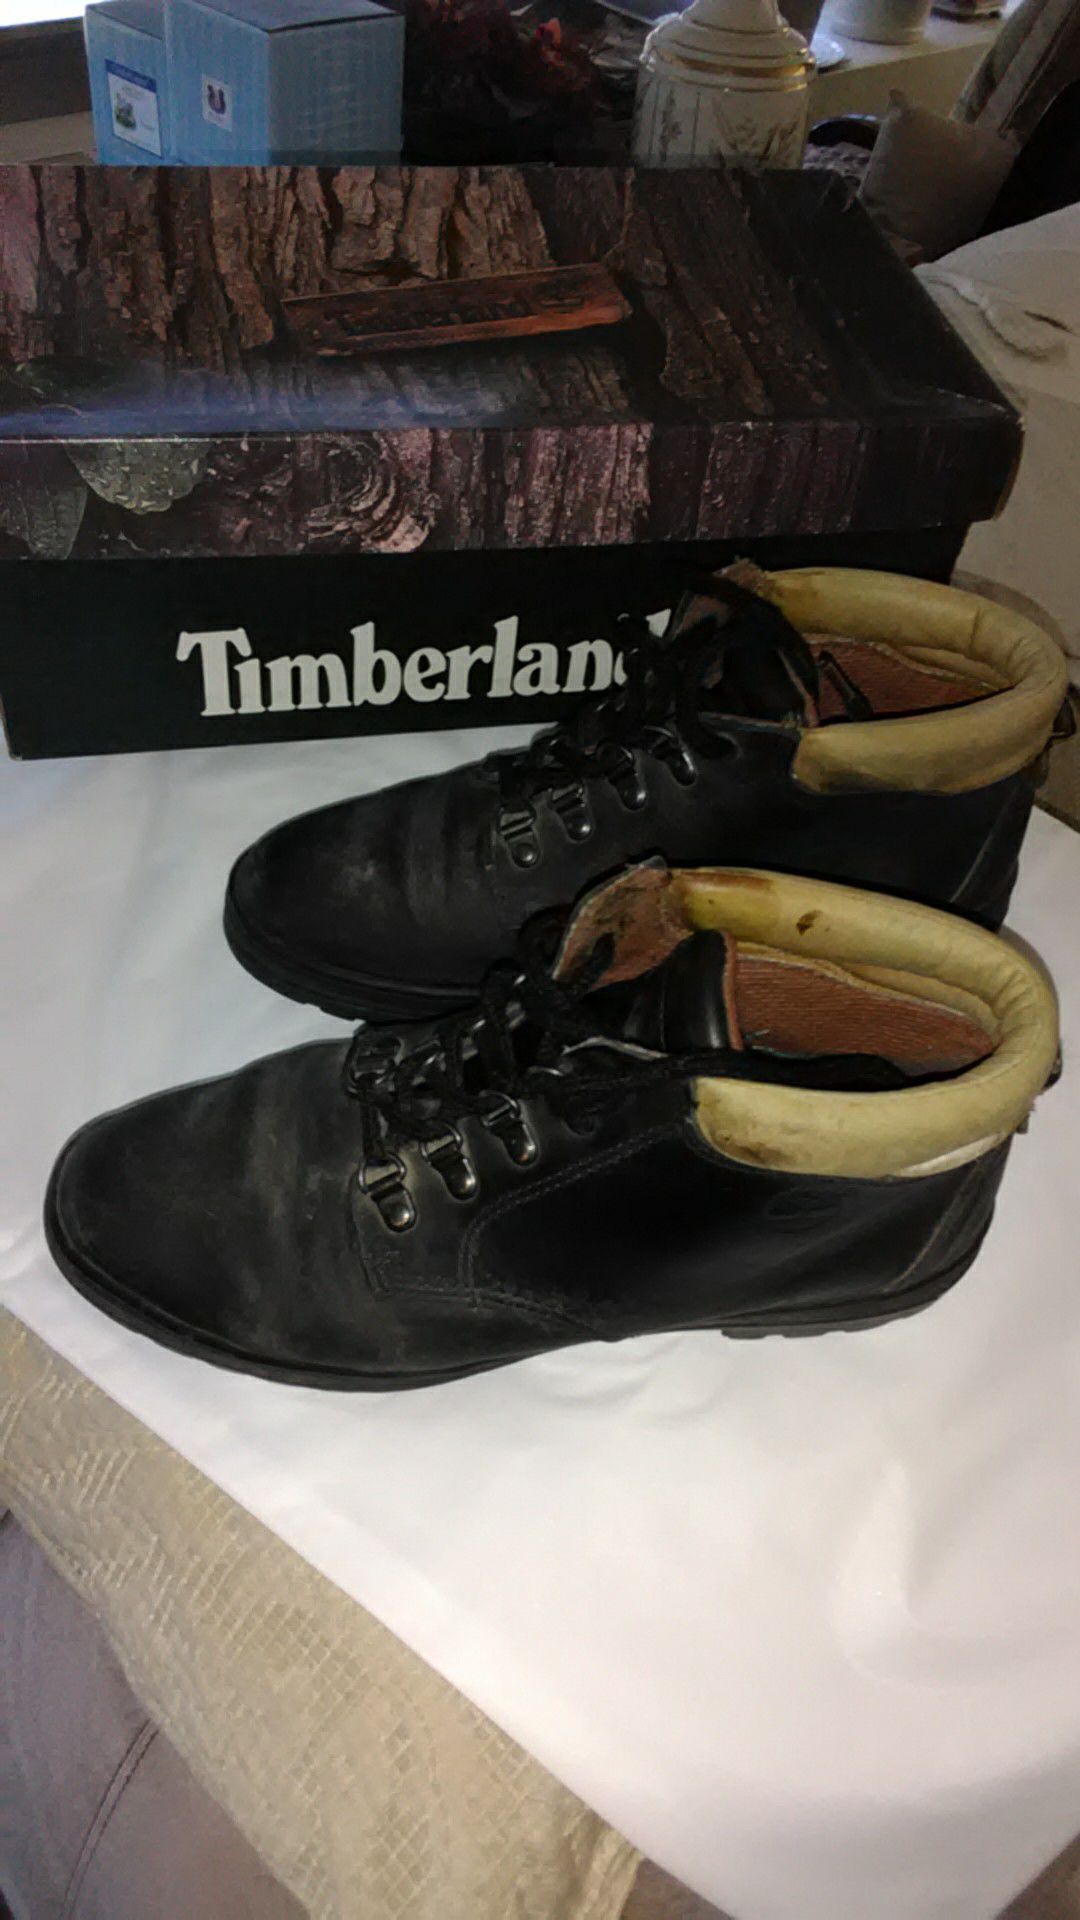 Timberland hiking boots